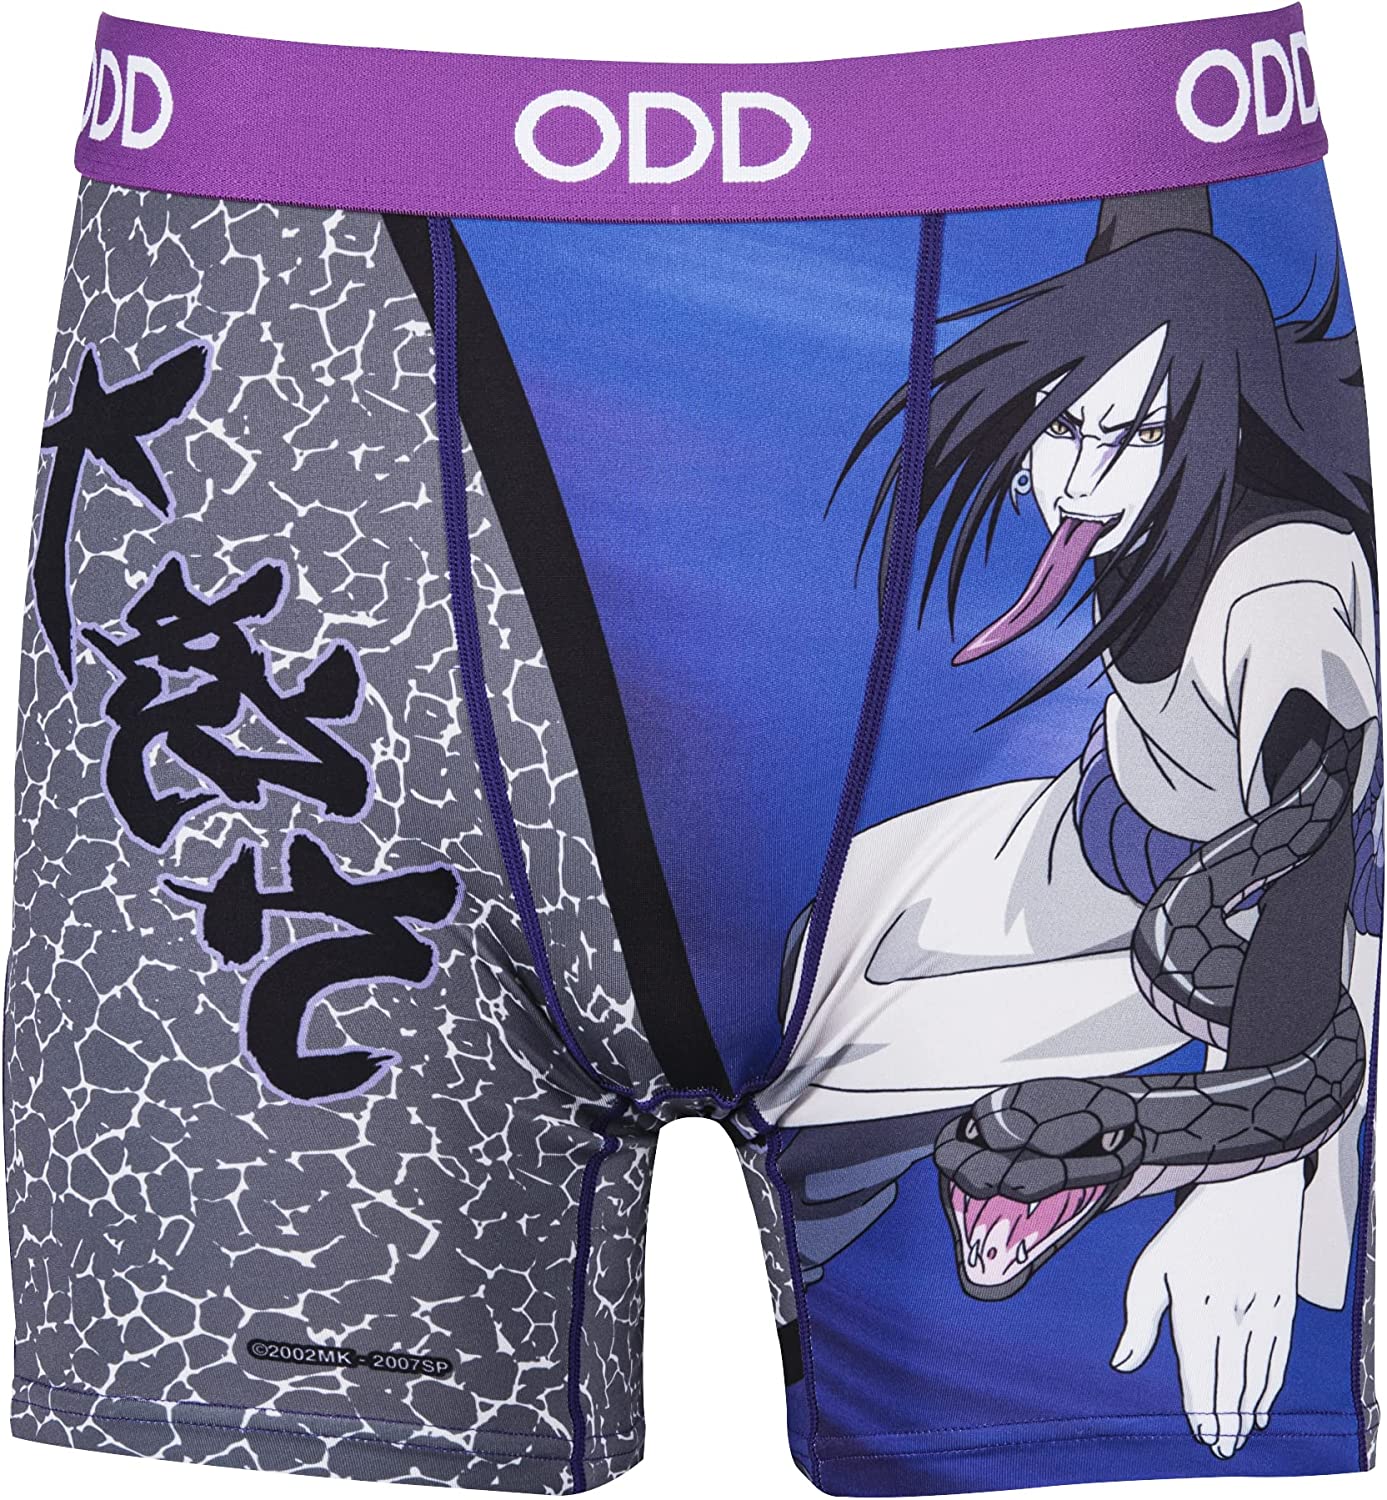 Odd Sox, Naruto Merchandise, Men's Underwear Boxer Briefs, Funny Graphic  Prints